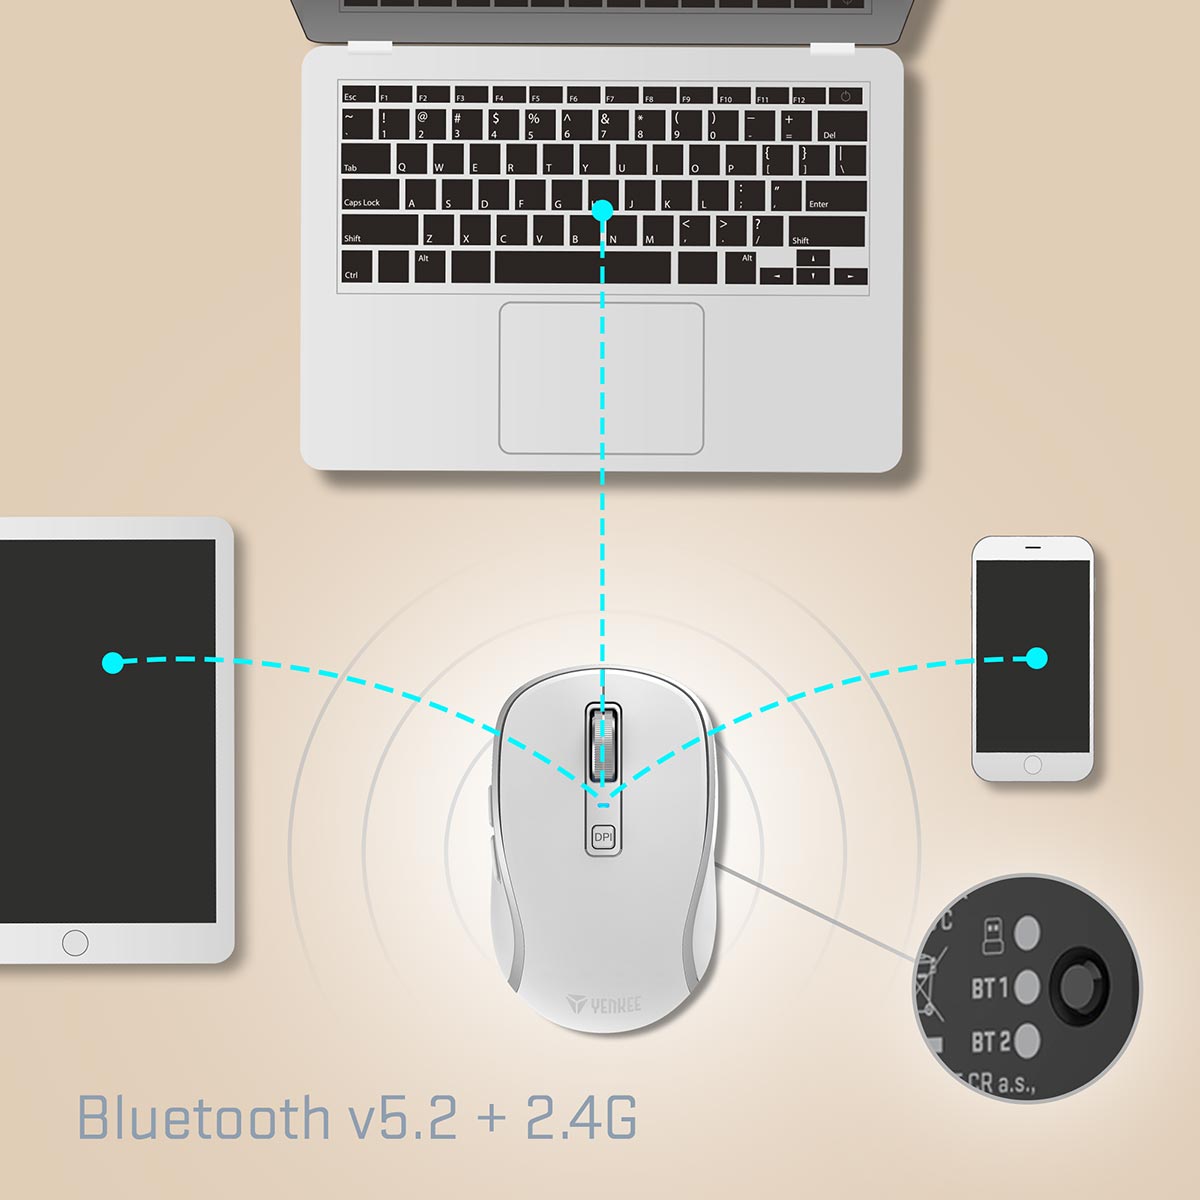 Three wireless solutions 2.4G + BT1 + BT2